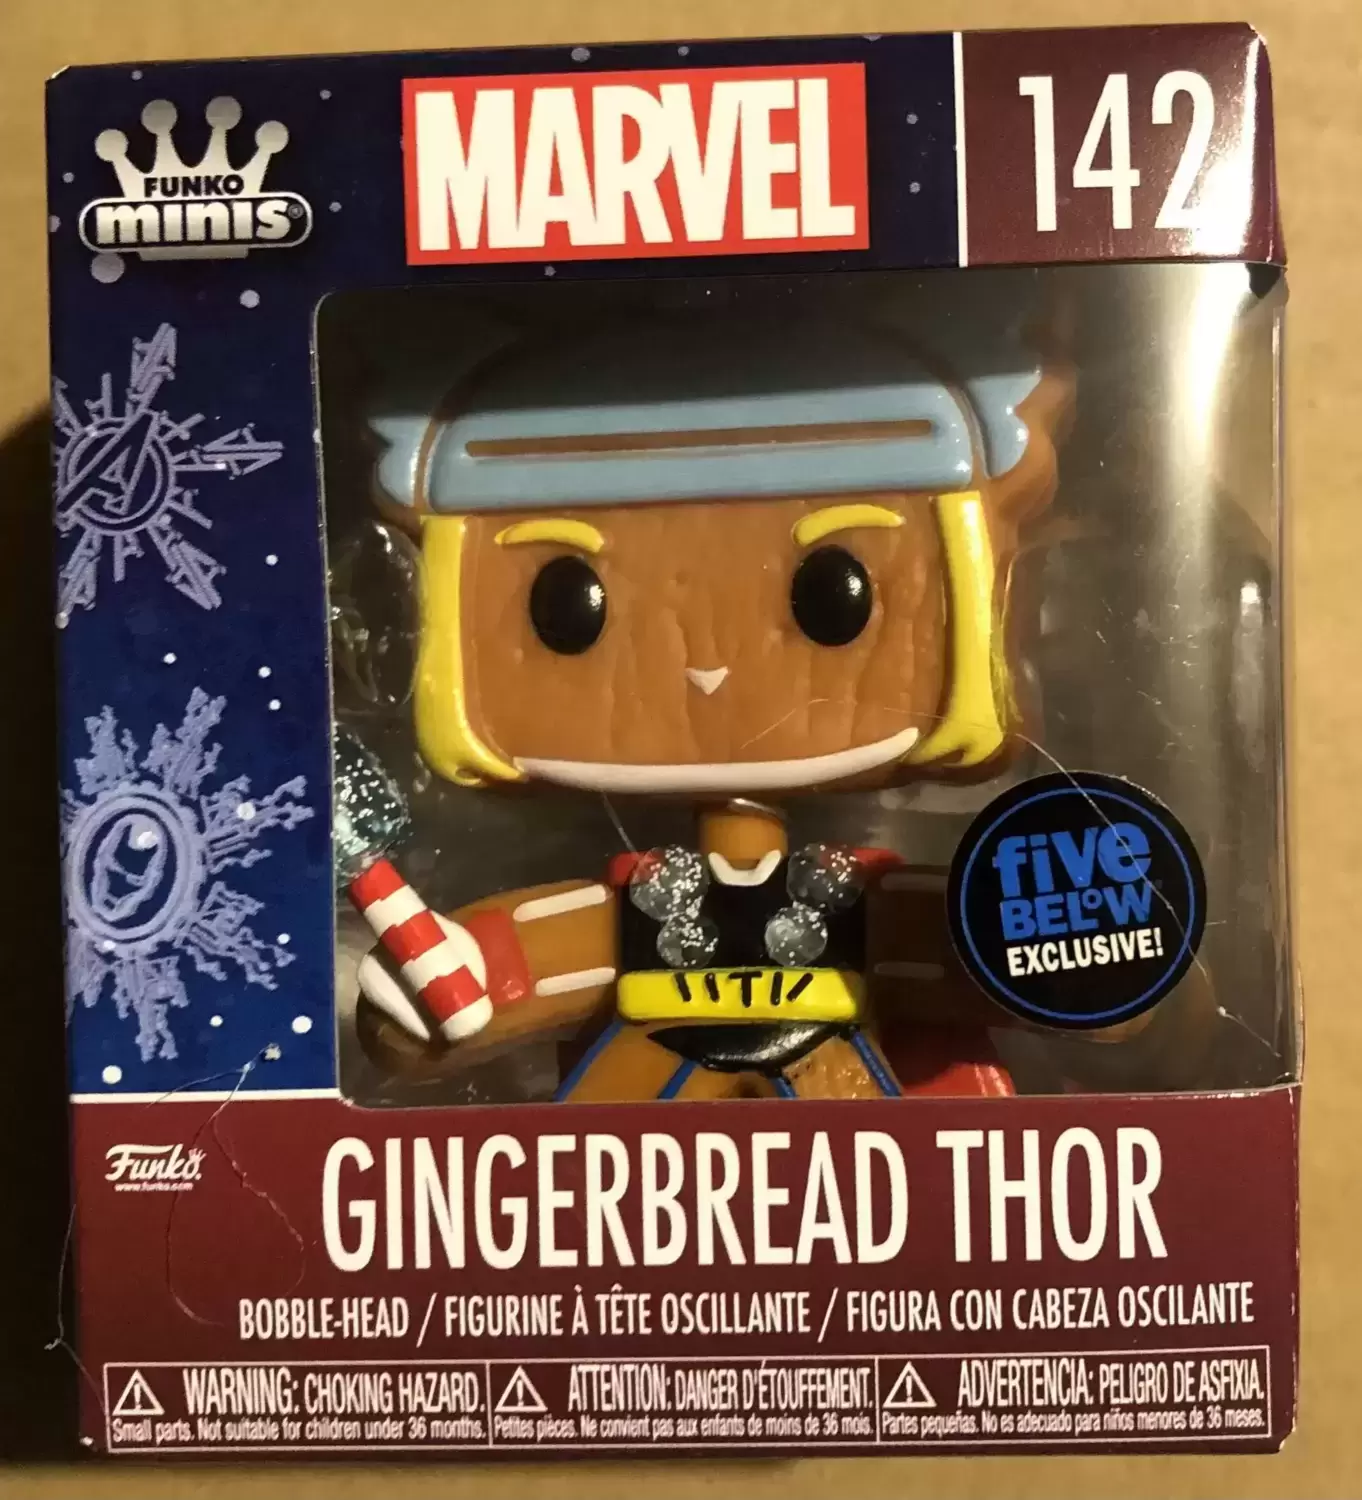 Funko Minis - Marvel - Gingerbread Thor